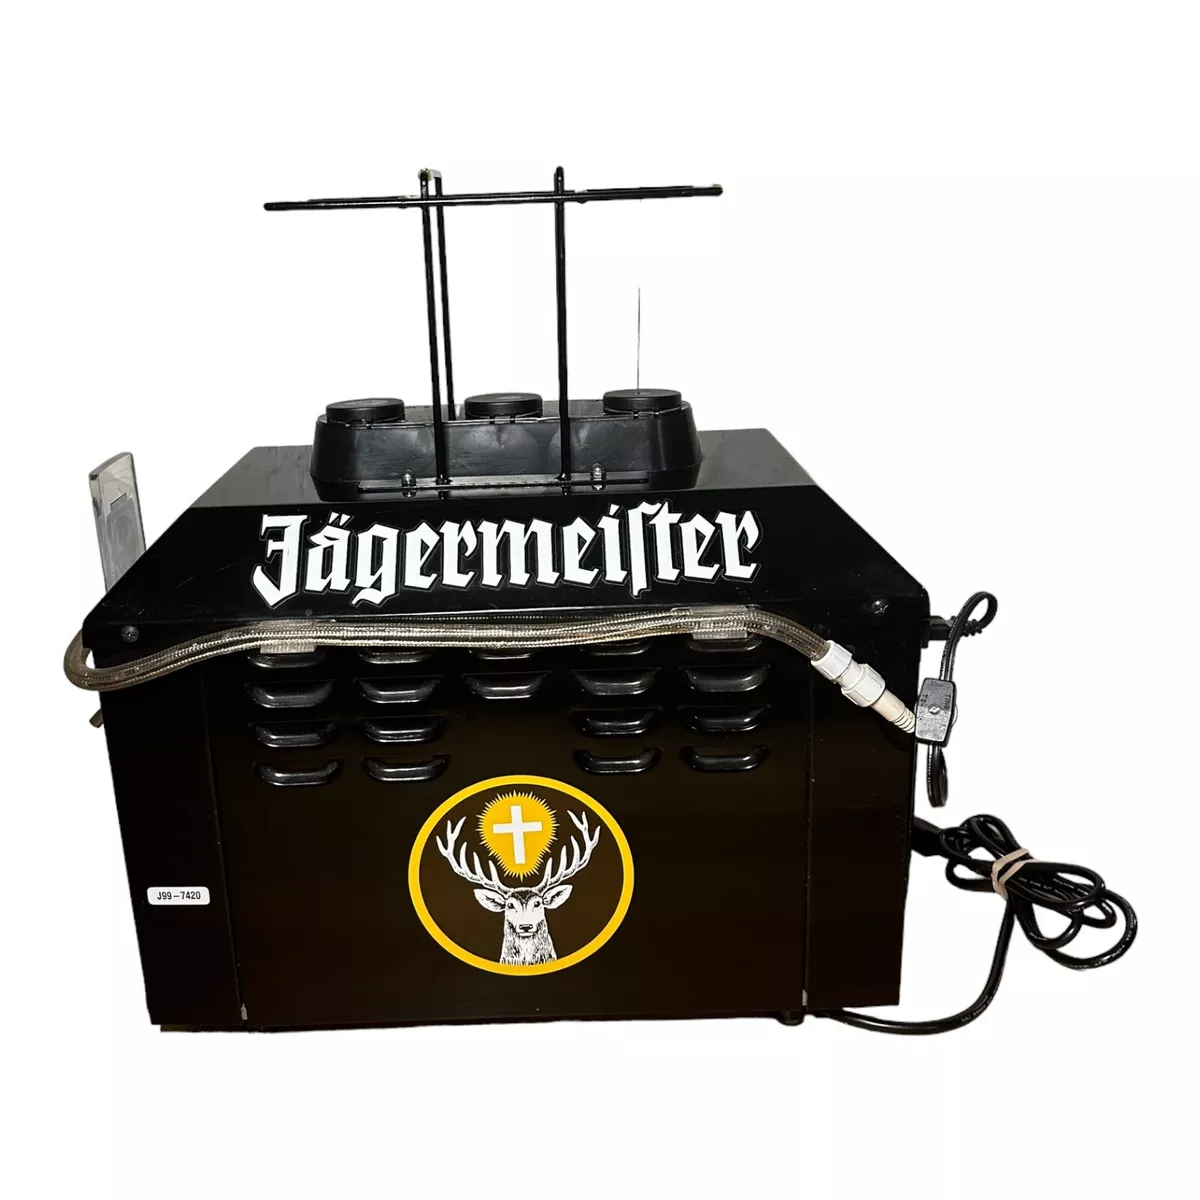 Jagermeister Tap Machine Model J99. Three Bottle Shot Dispenser Chiller